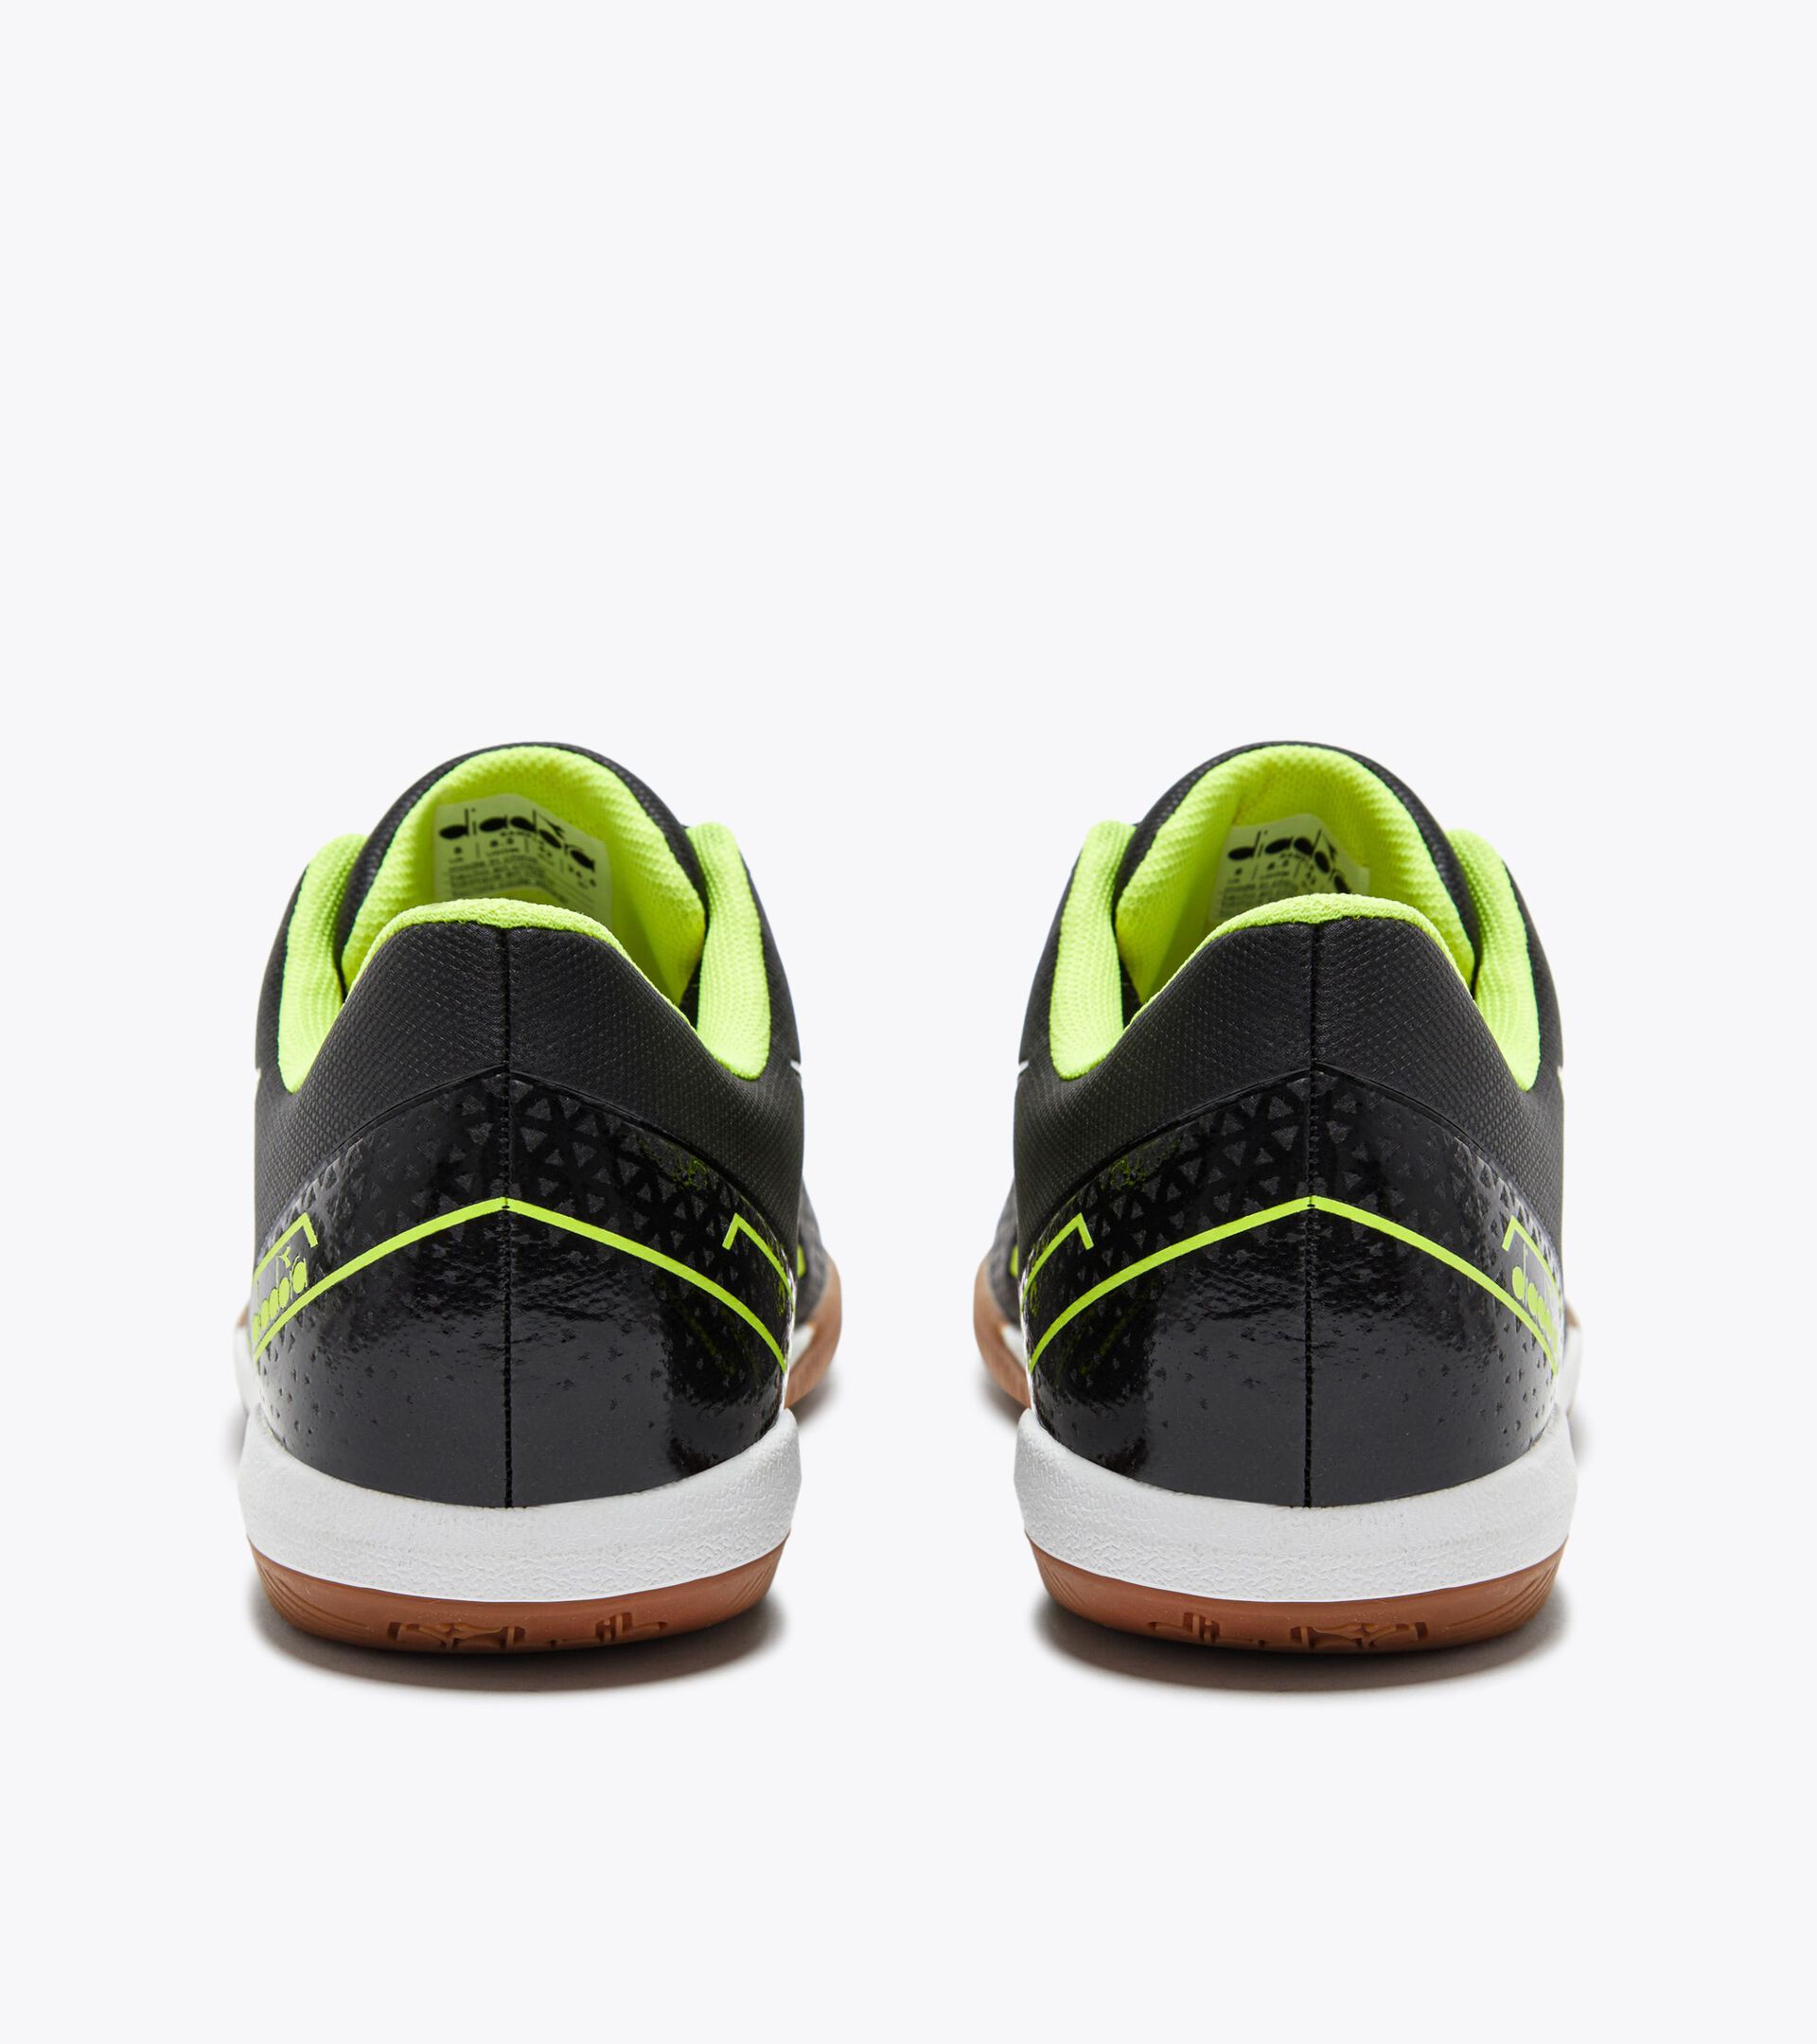 Chaussures de futsal - Homme PICHICHI 6 IDR NERO/GIALLO FL DD/BIANCO OTTIC - Diadora